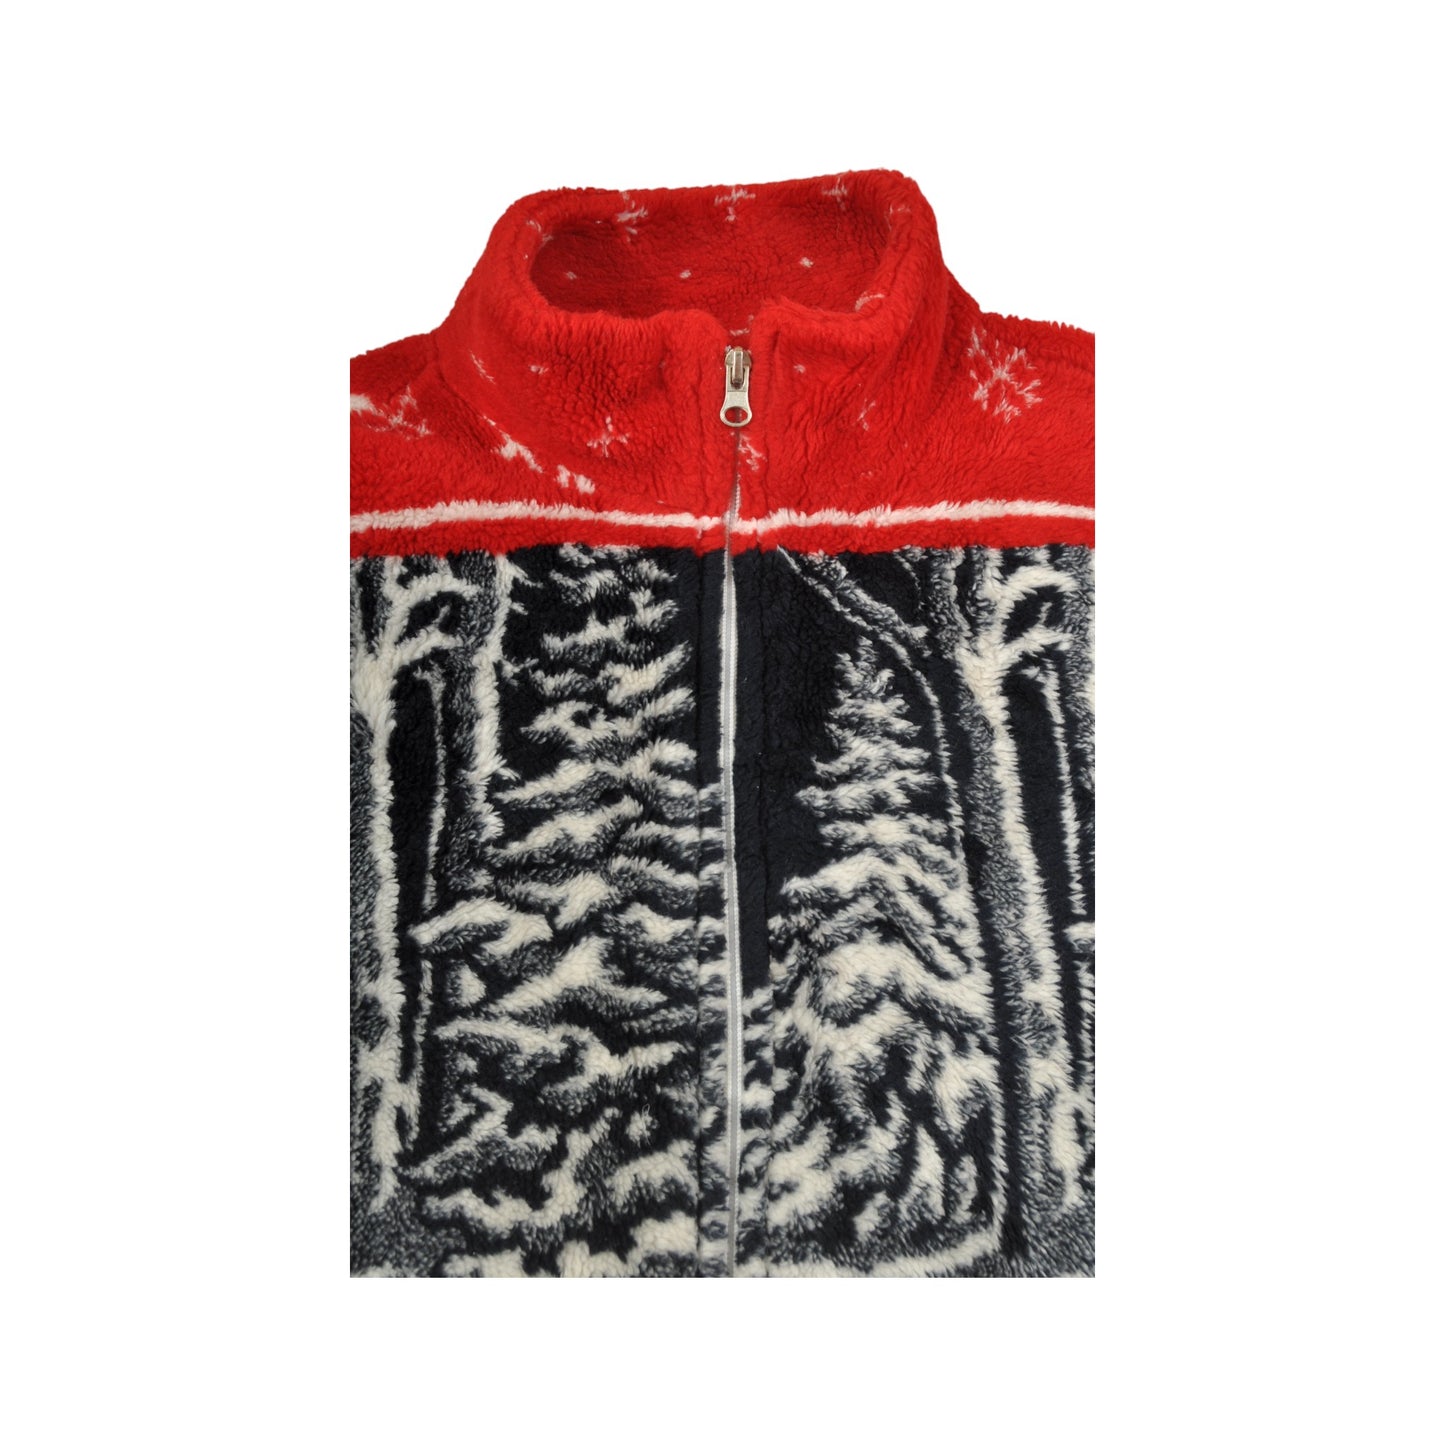 Vintage Fleece Jacket Winter Pattern Red/Black Large